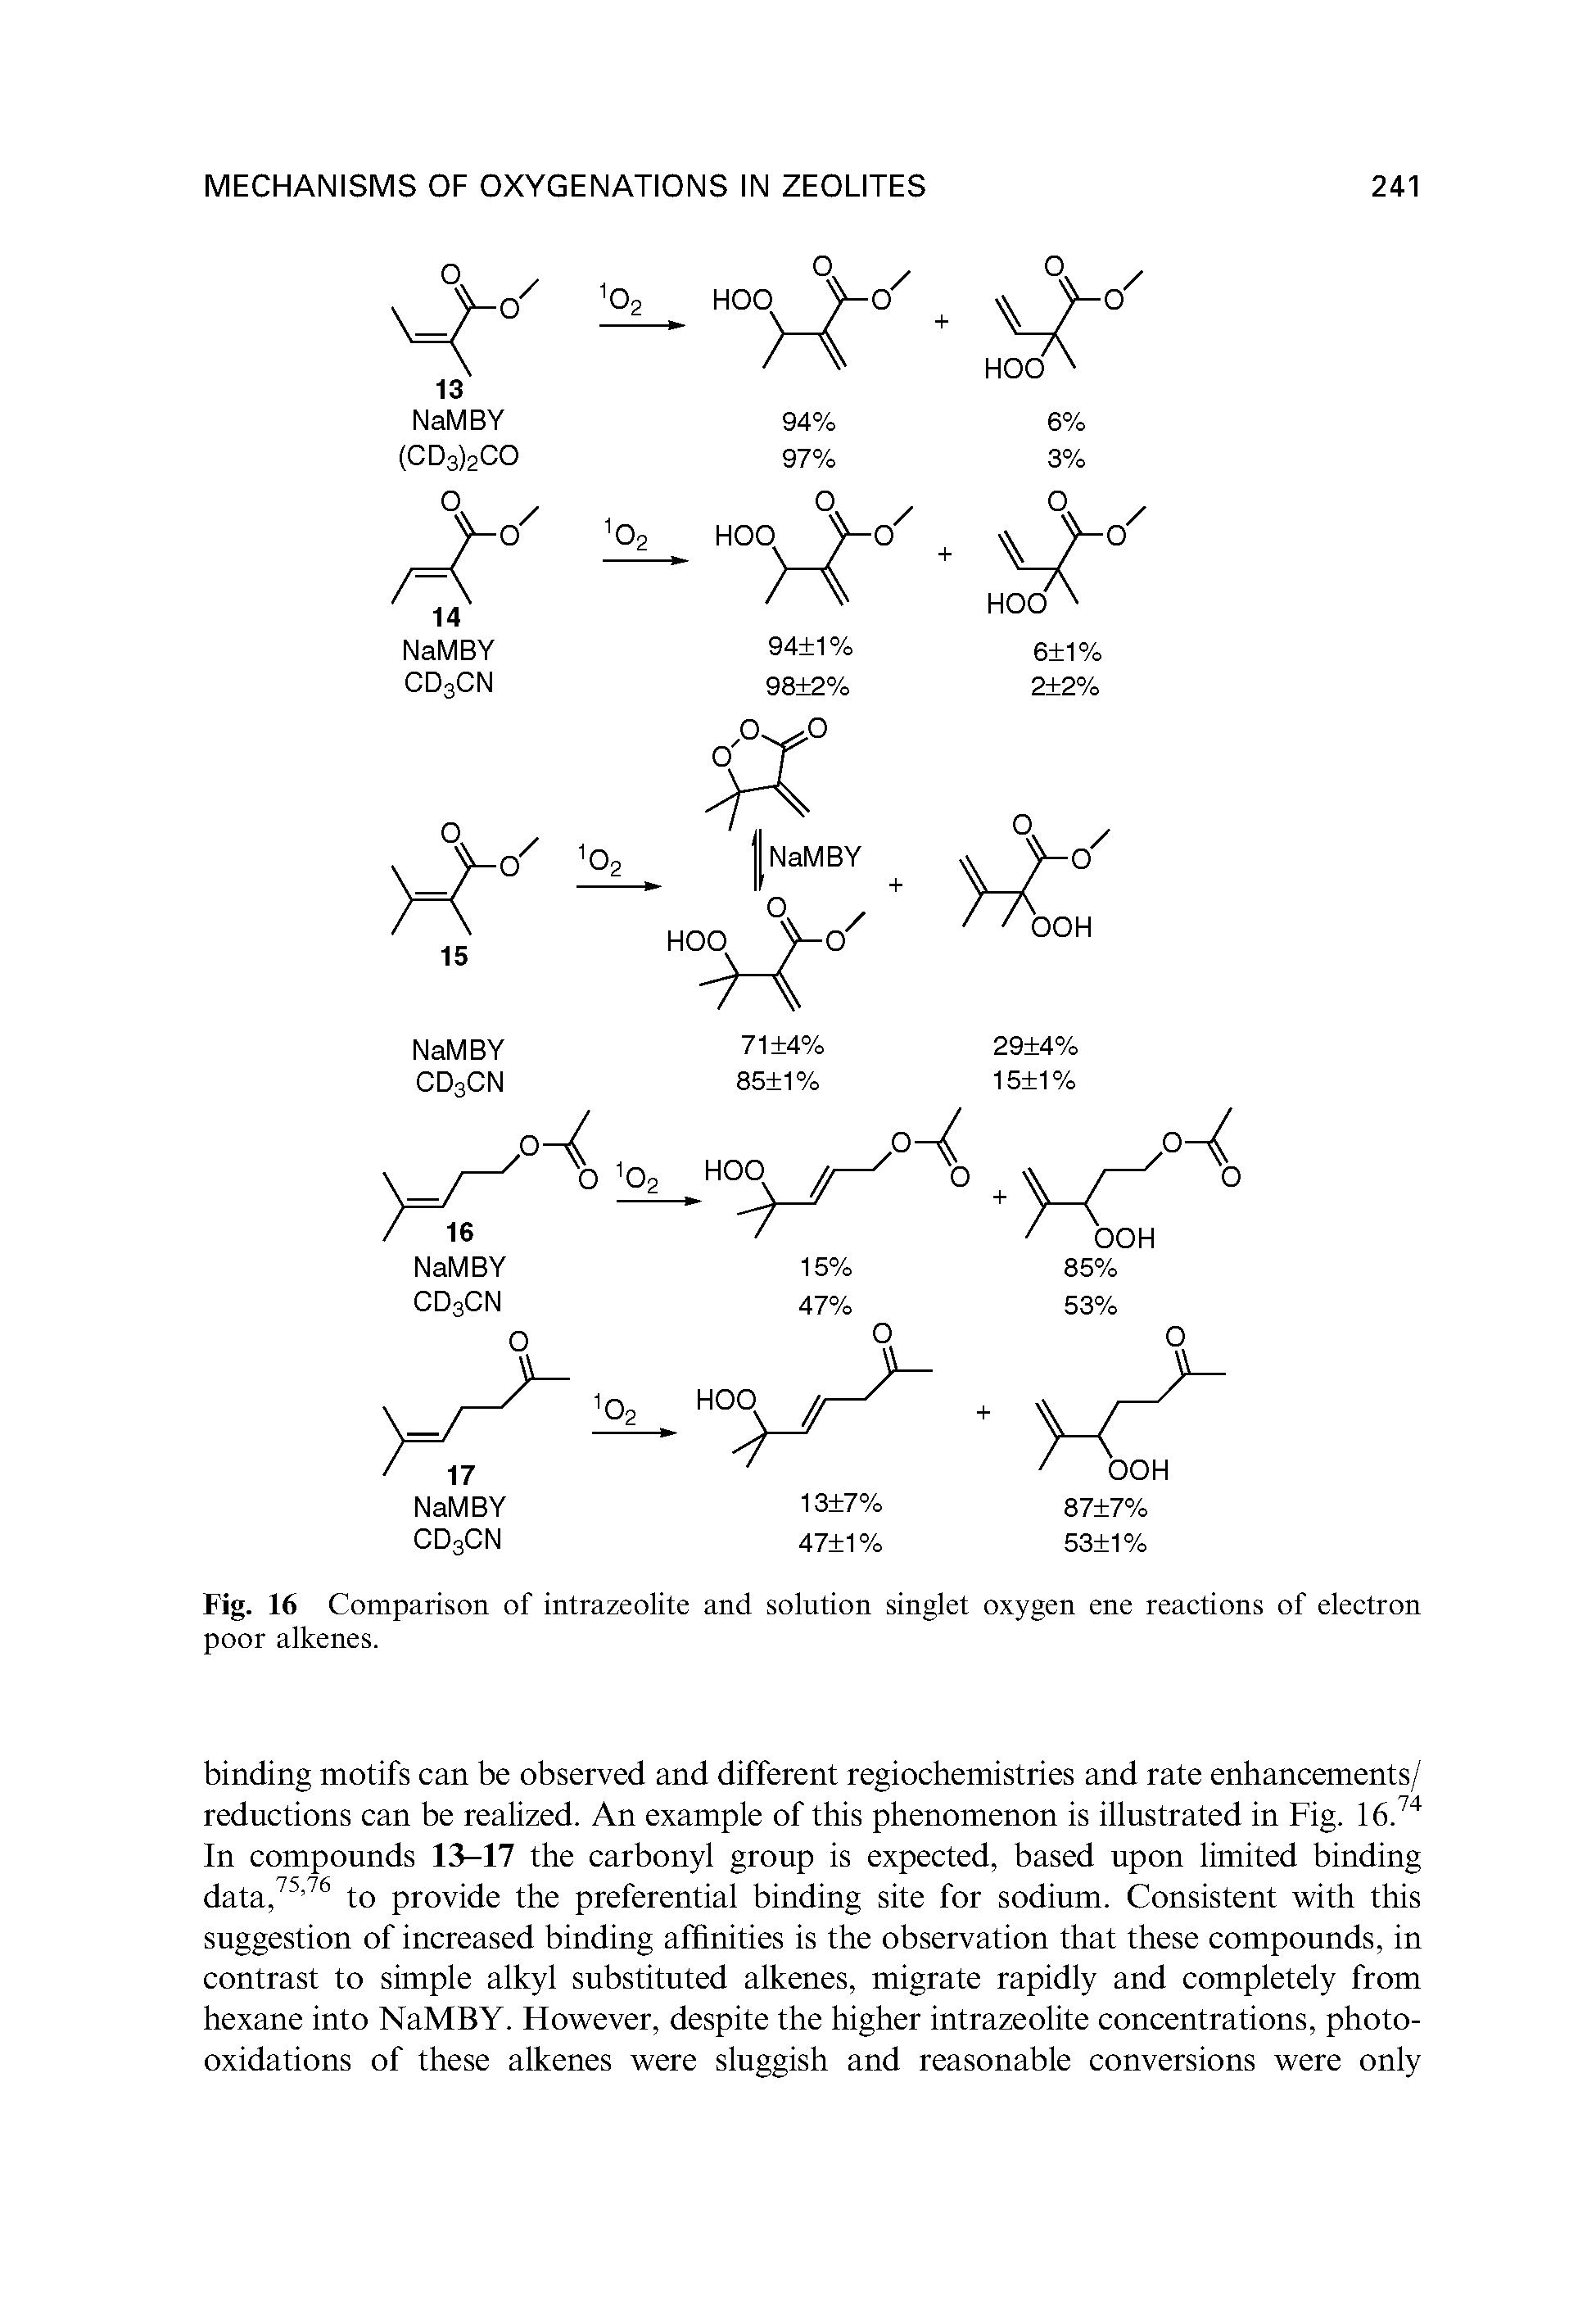 Fig. 16 Comparison of intrazeolite and solution singlet oxygen ene reactions of electron poor alkenes.